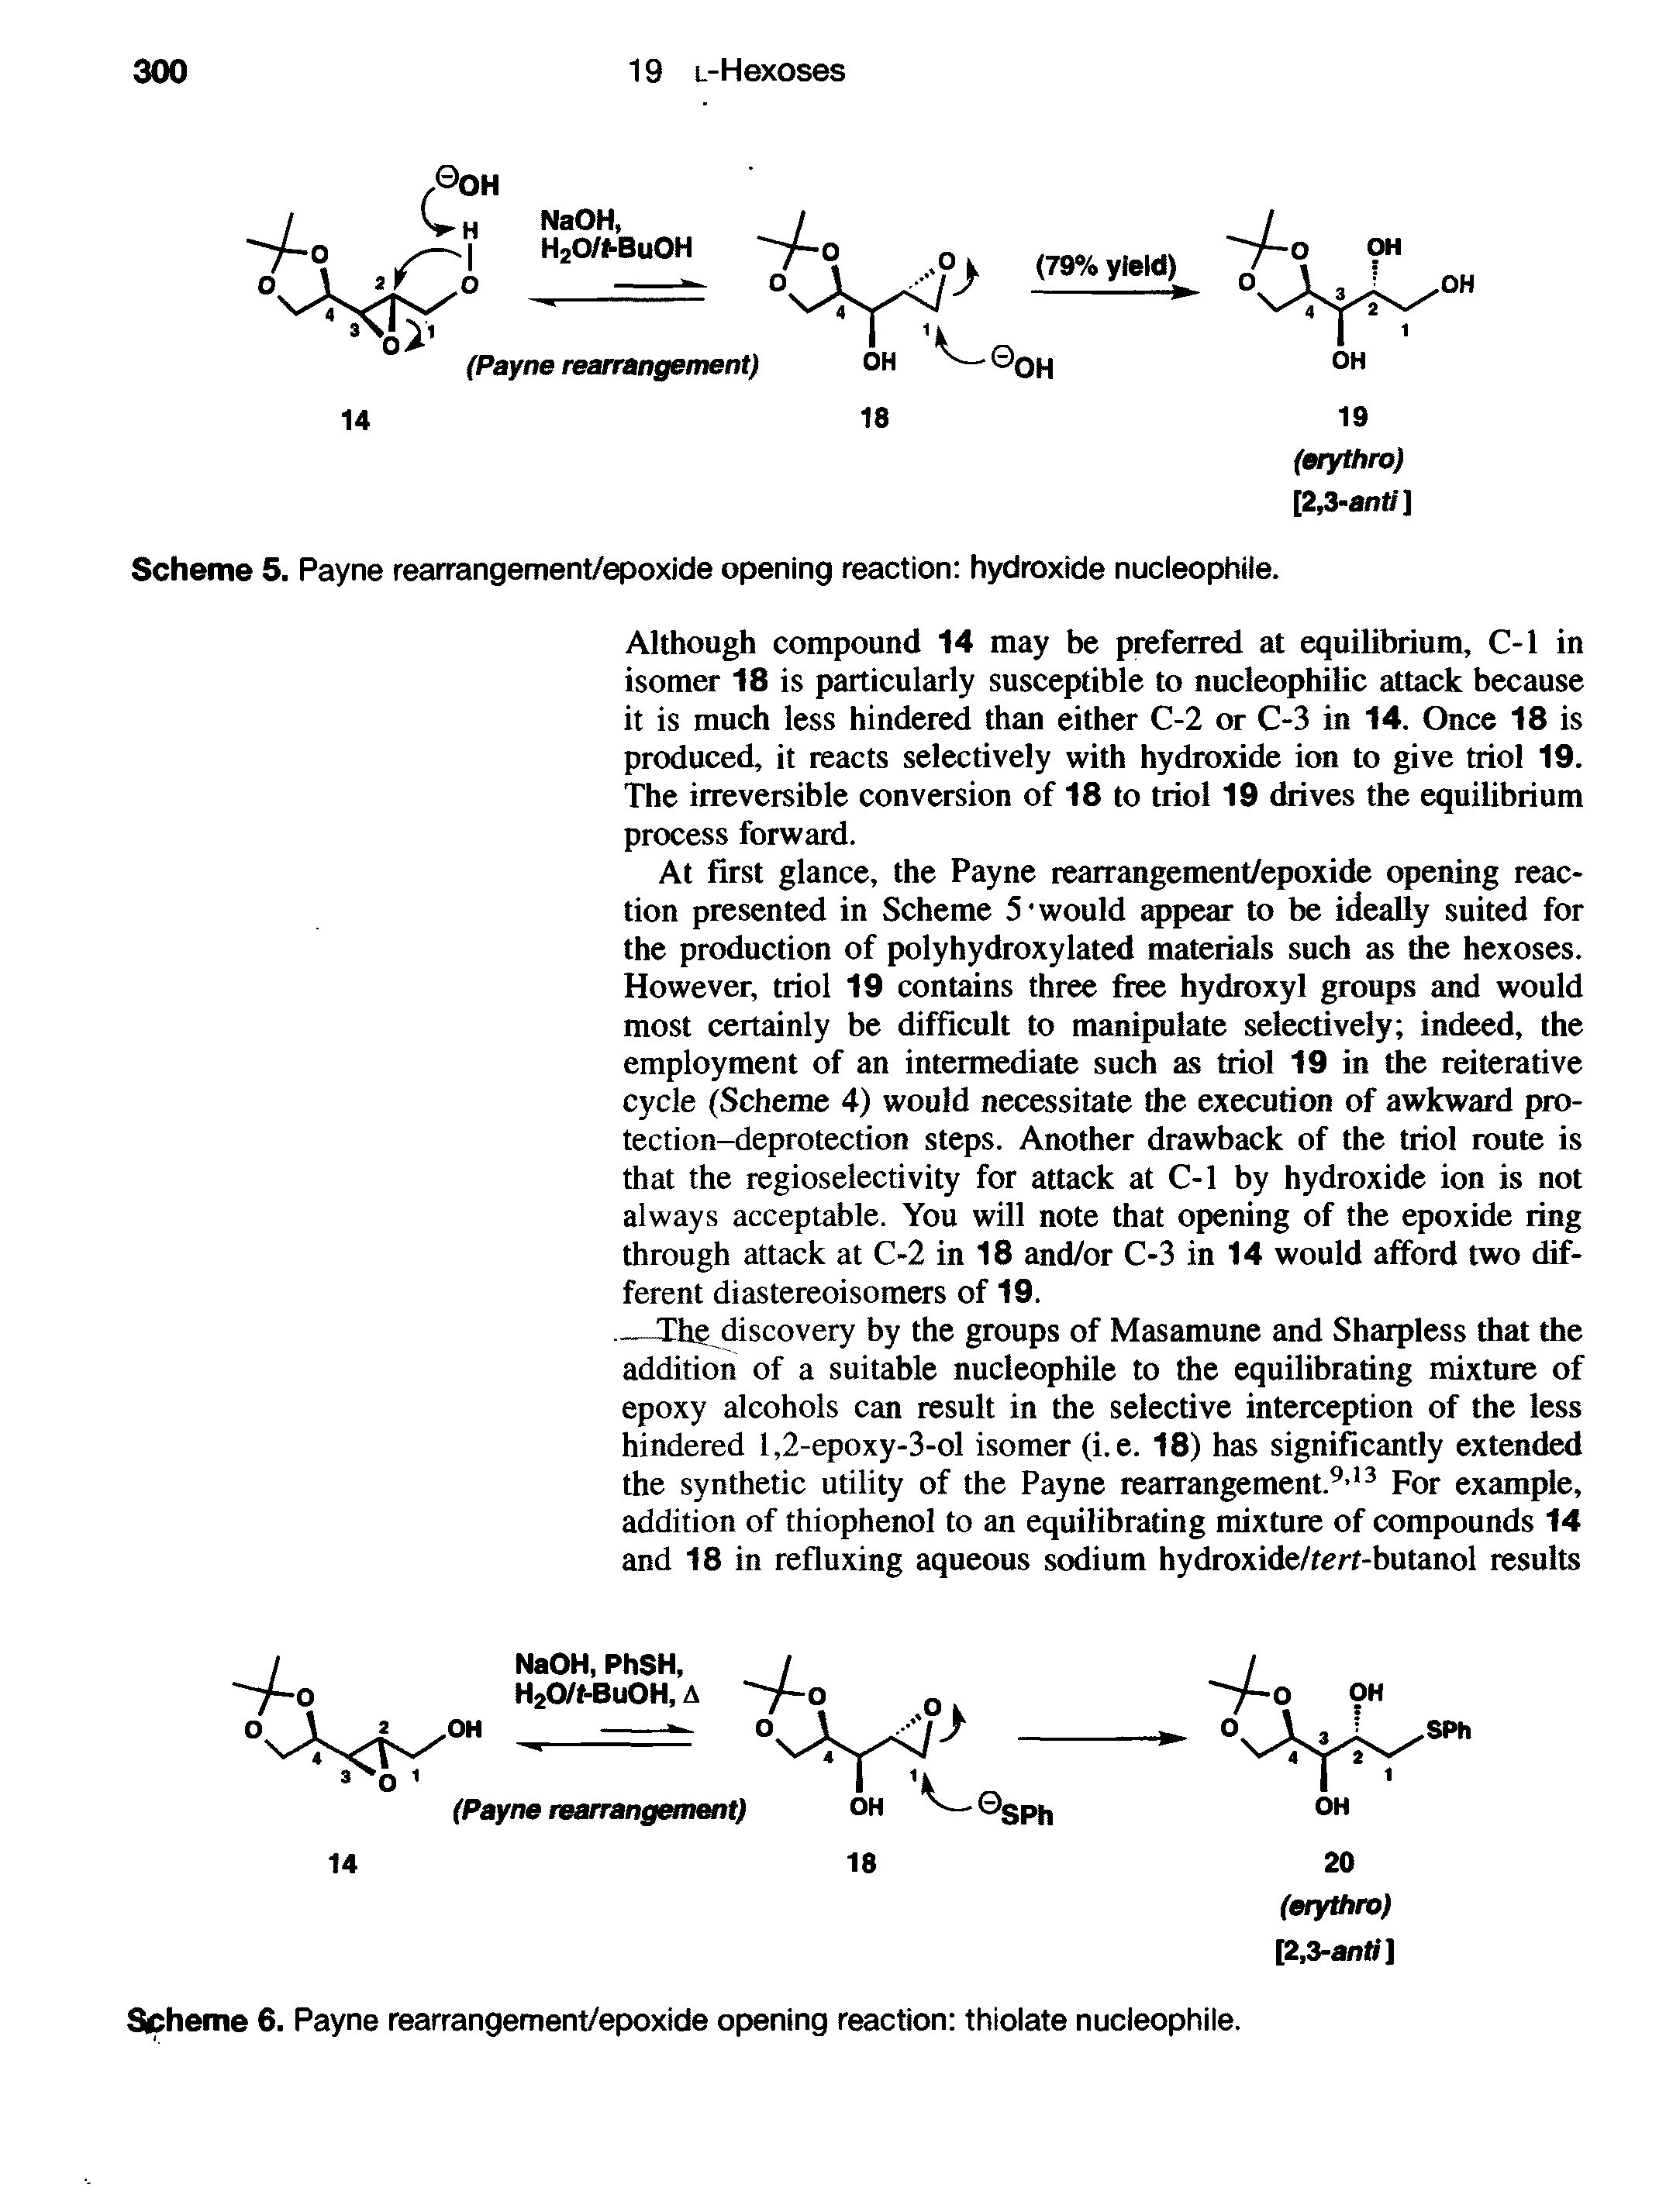 Scheme 5. Payne rearrangement/epoxide opening reaction hydroxide nucleophile.